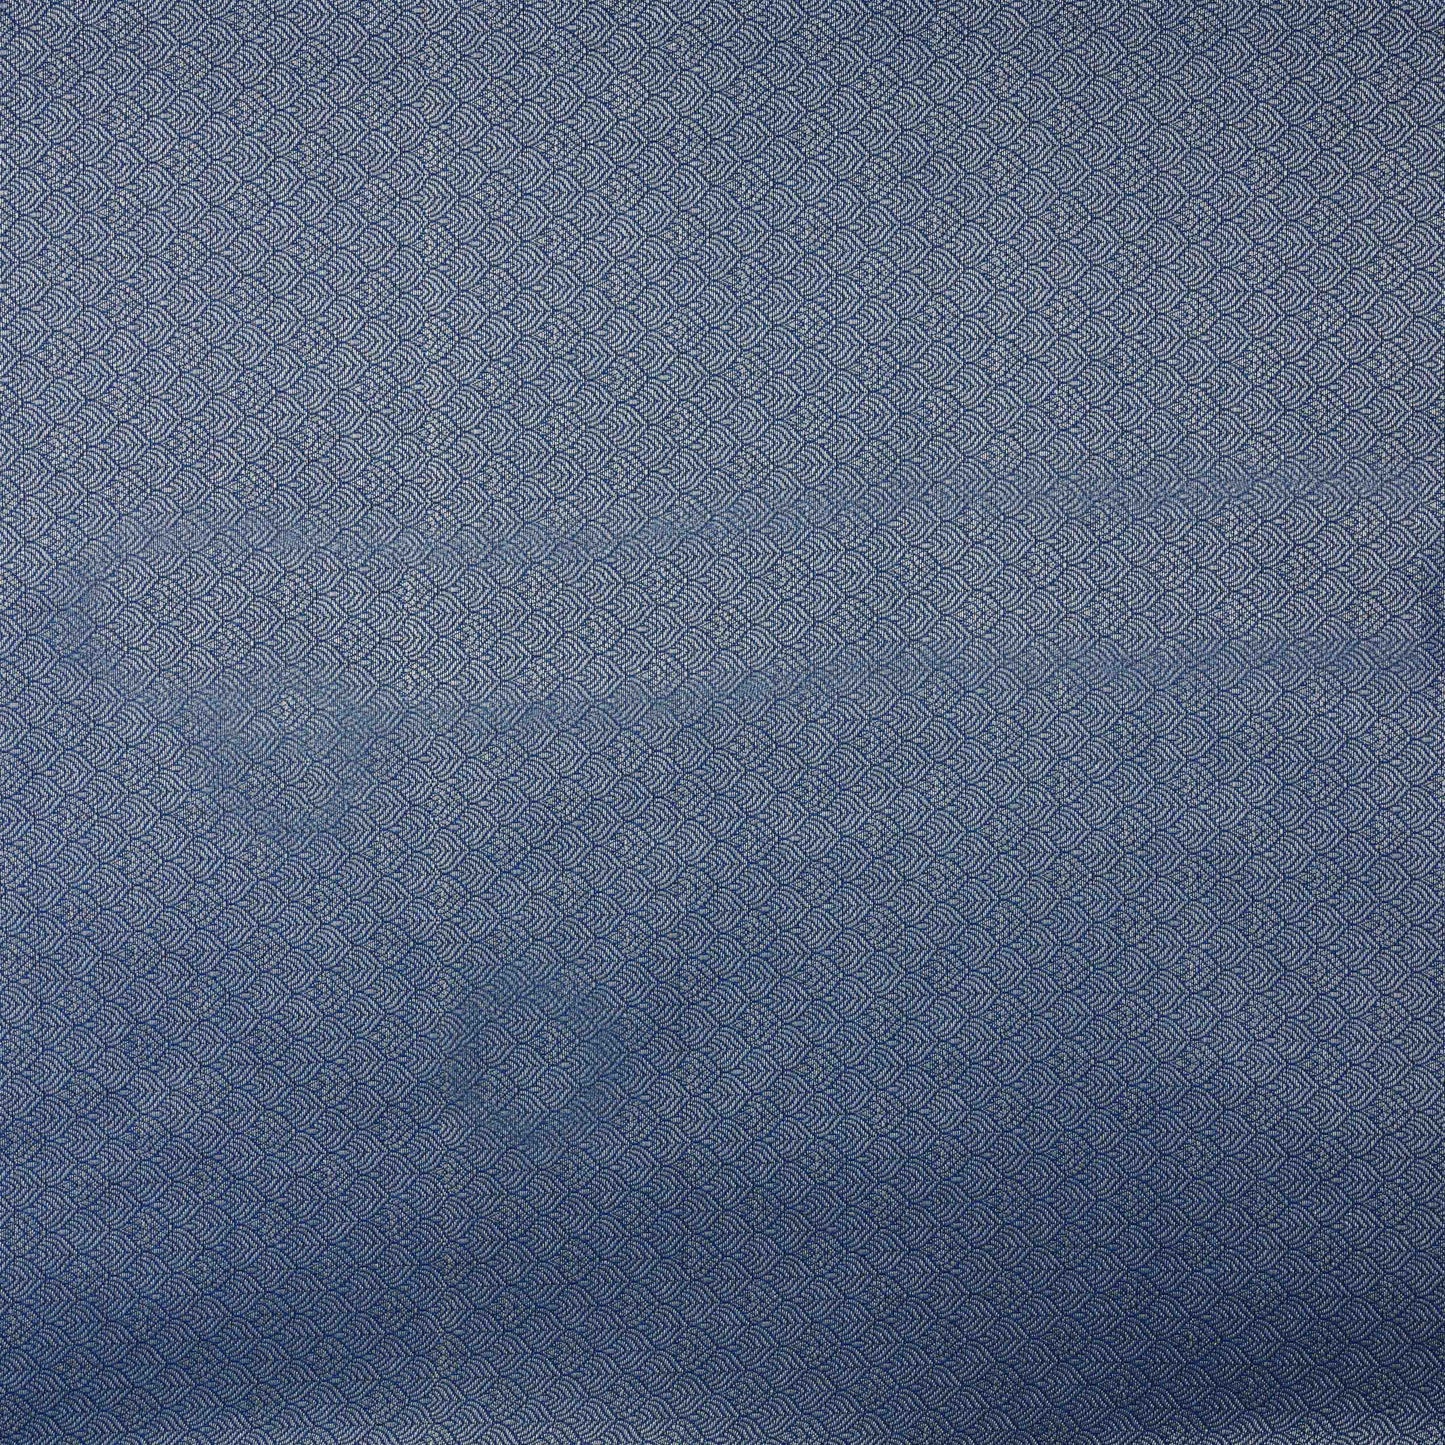 Teal Blue Color Katan Brocade Fabric